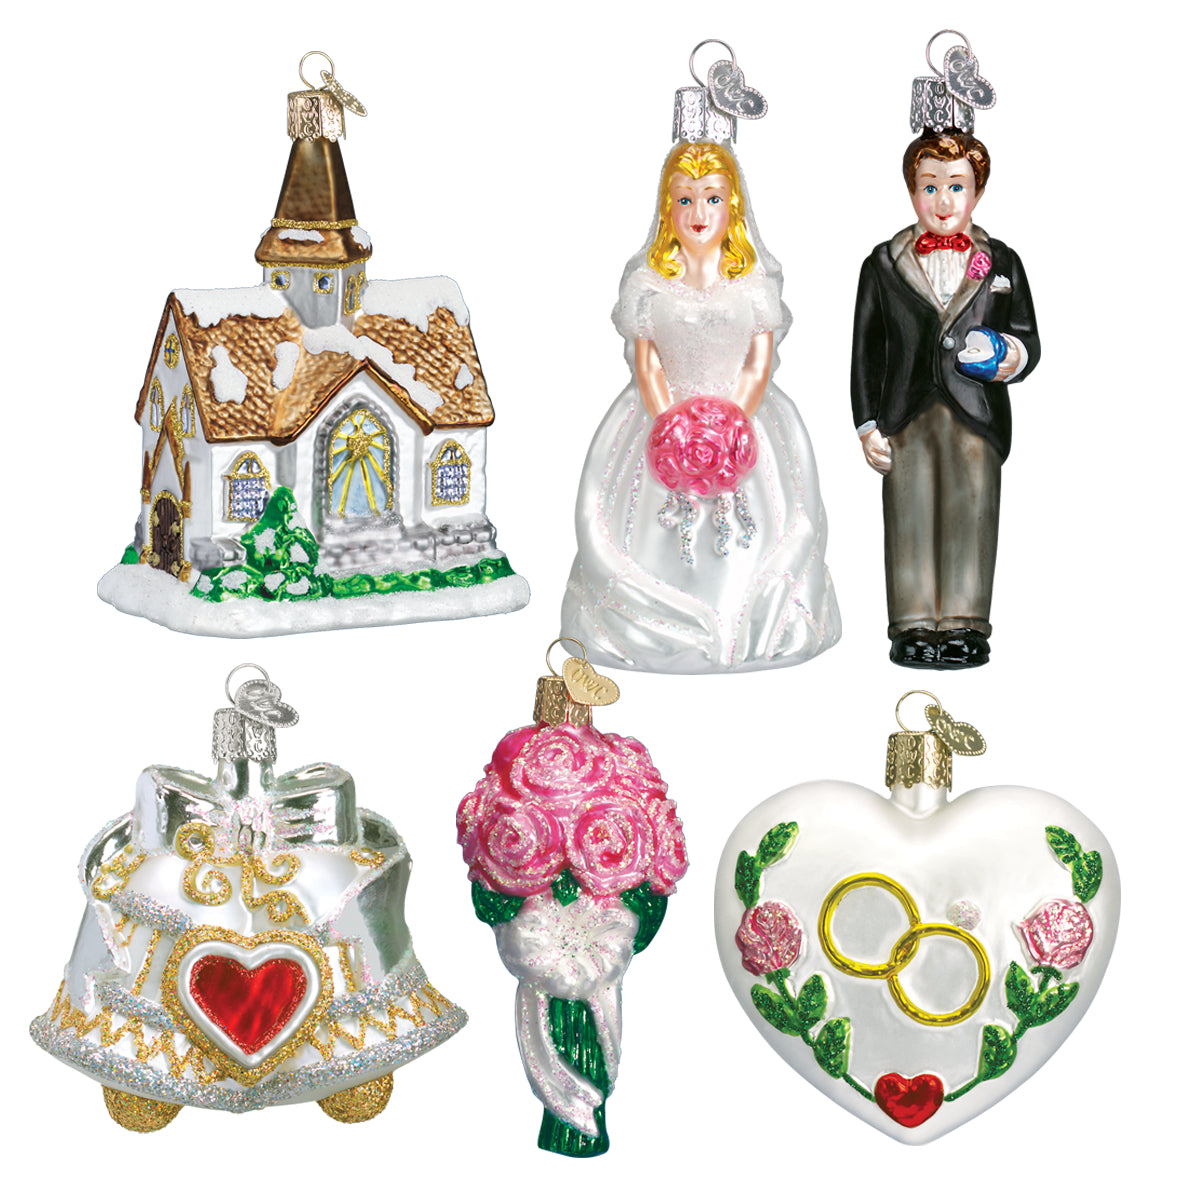 Old World Christmas Wedding Collection Ornament Box Set - 2